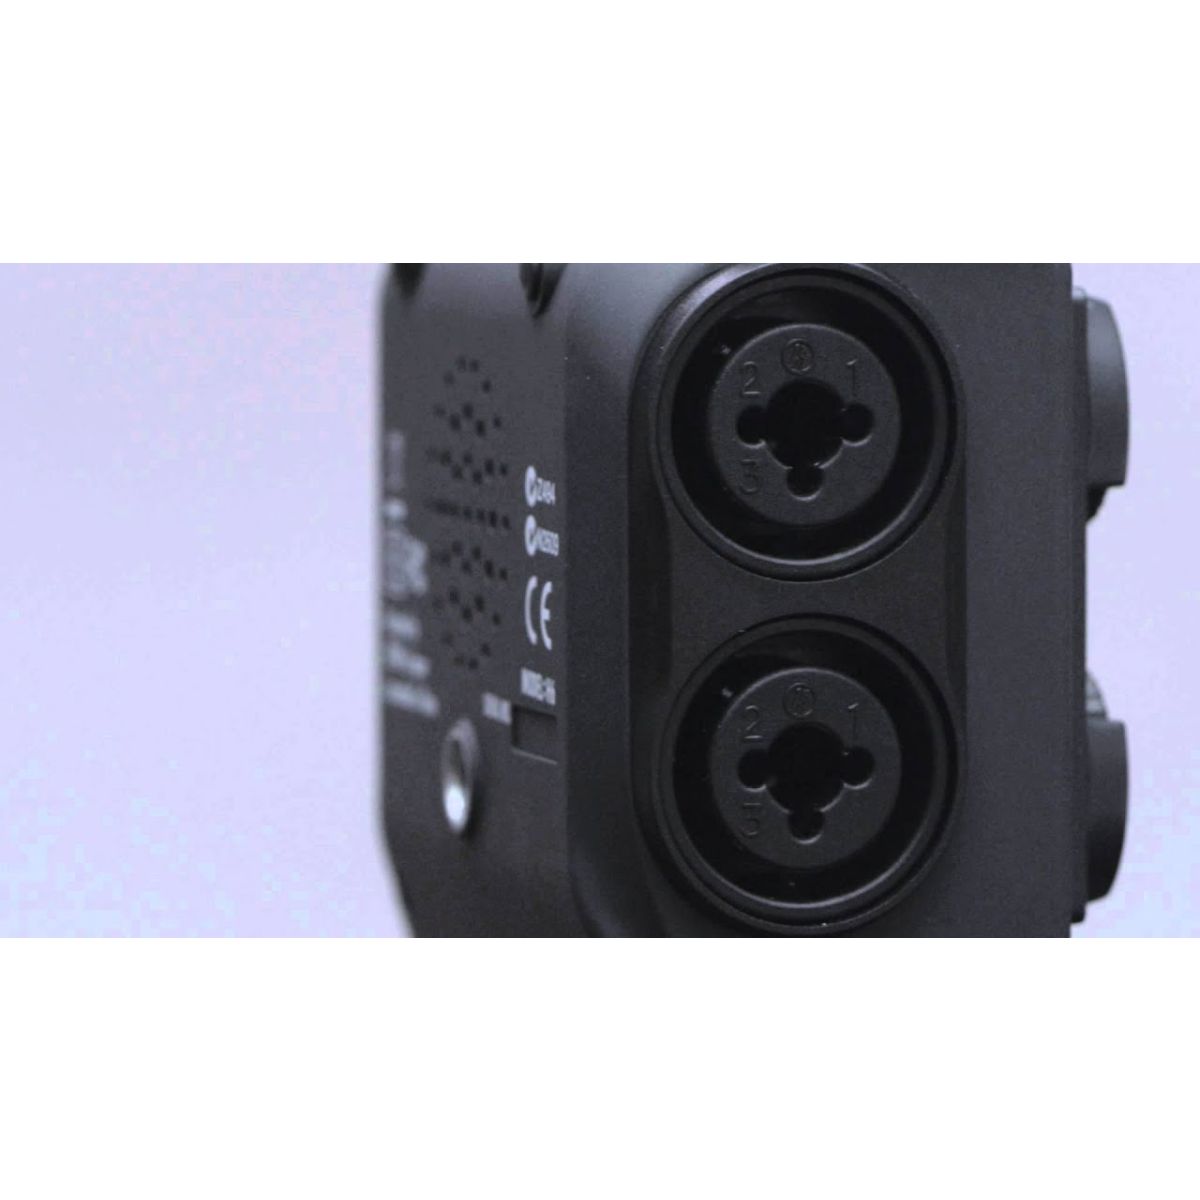 Zoom H6 Audio Recorder, portabel